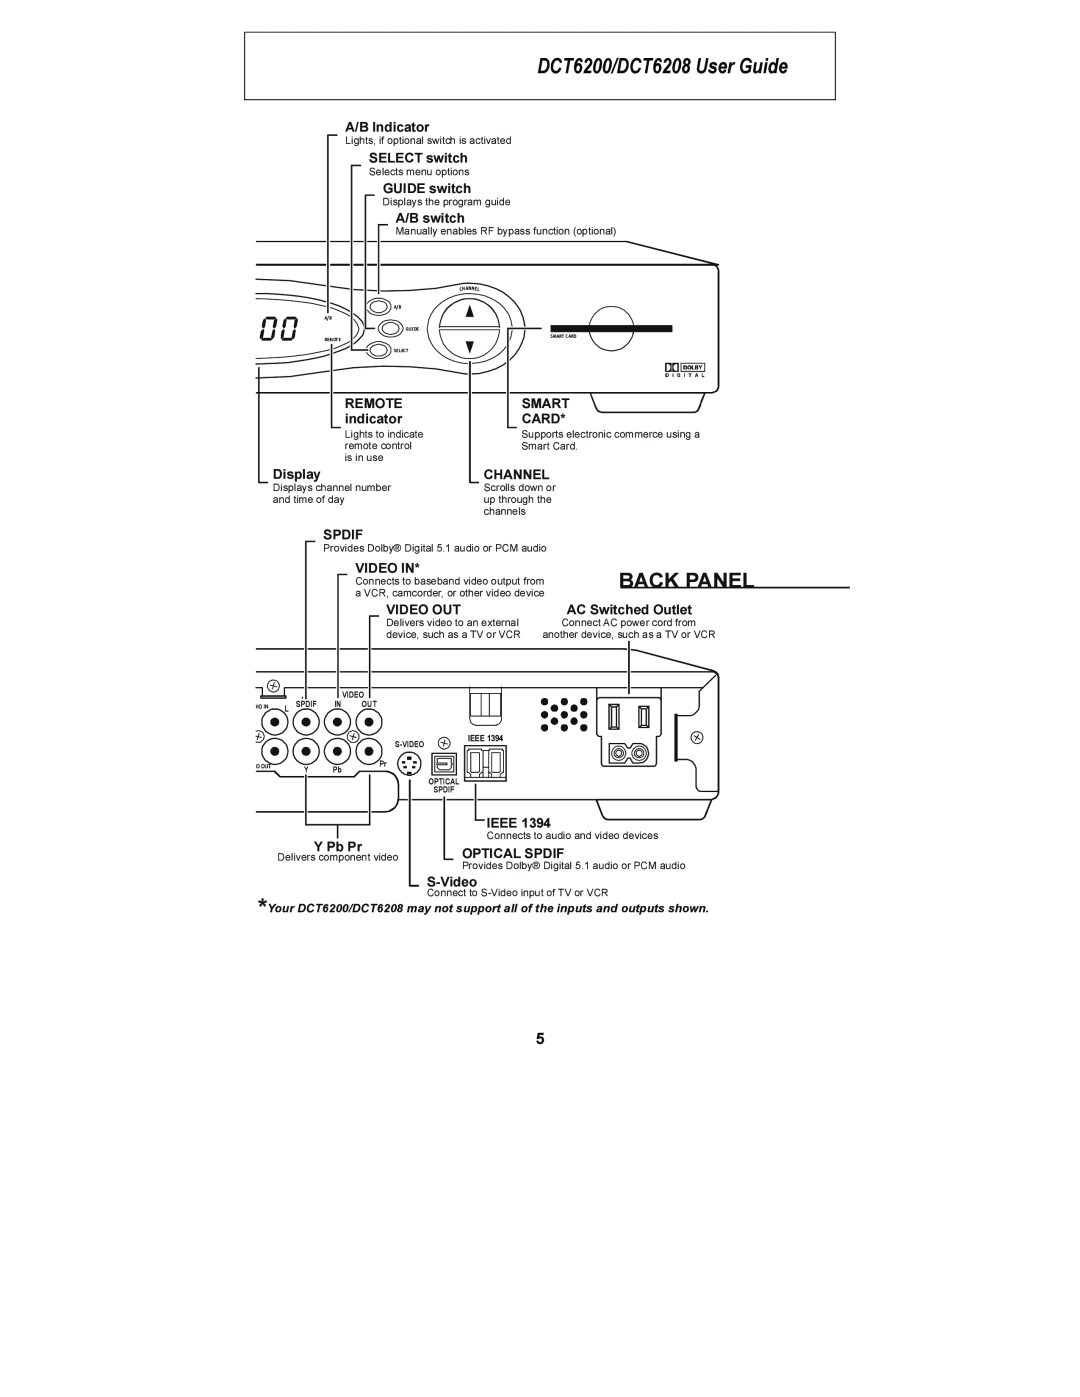 Motorola manual Back Panel, DCT6200/DCT6208 User Guide 